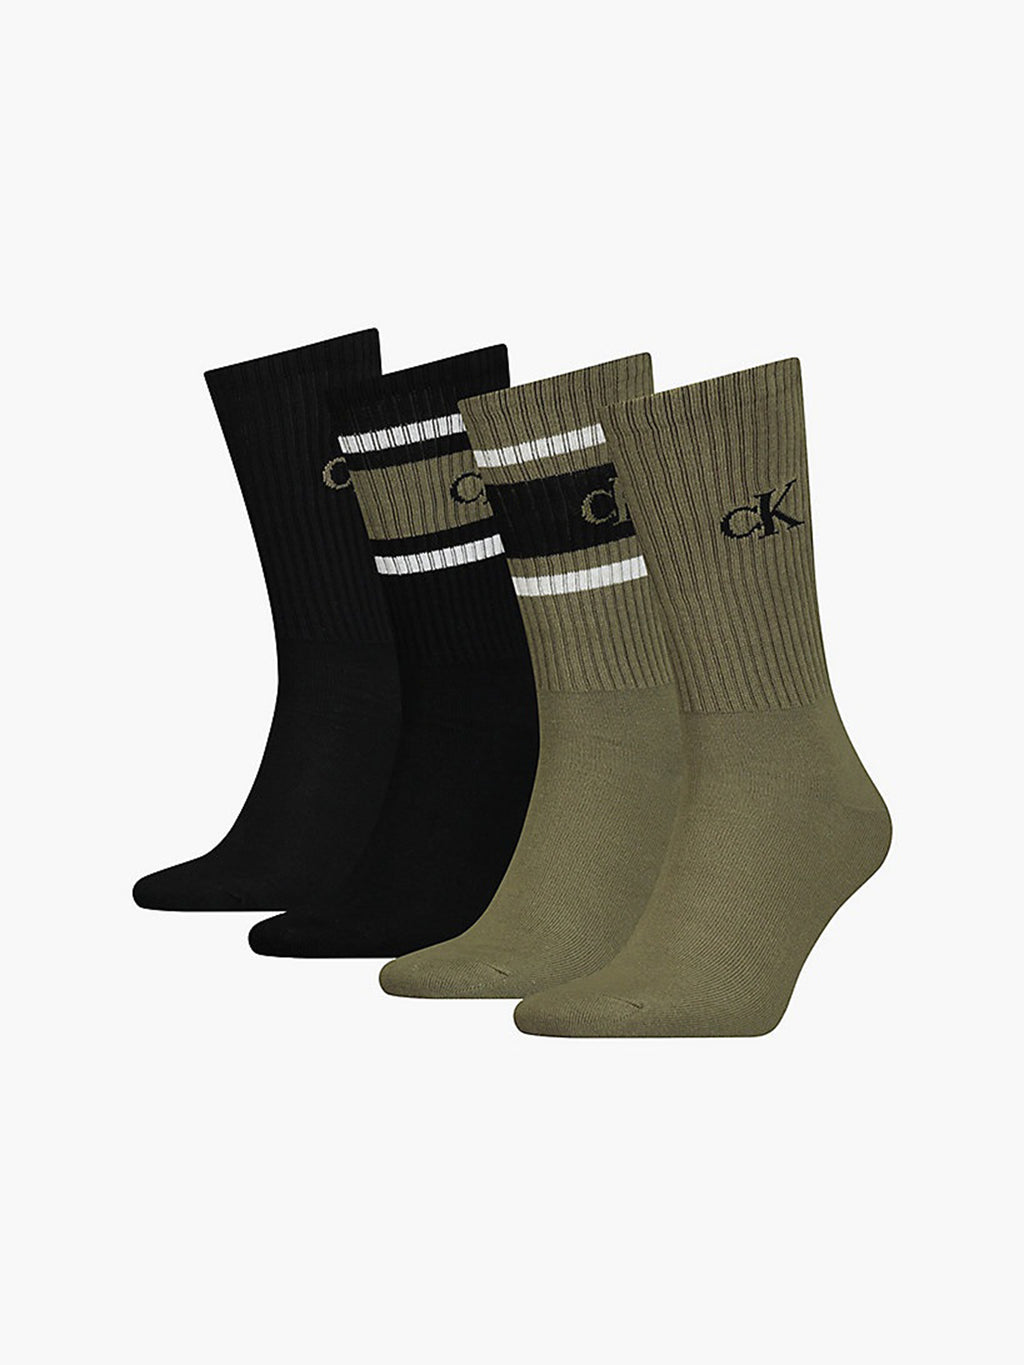 ck-socks-4-set-black-green-C70121983